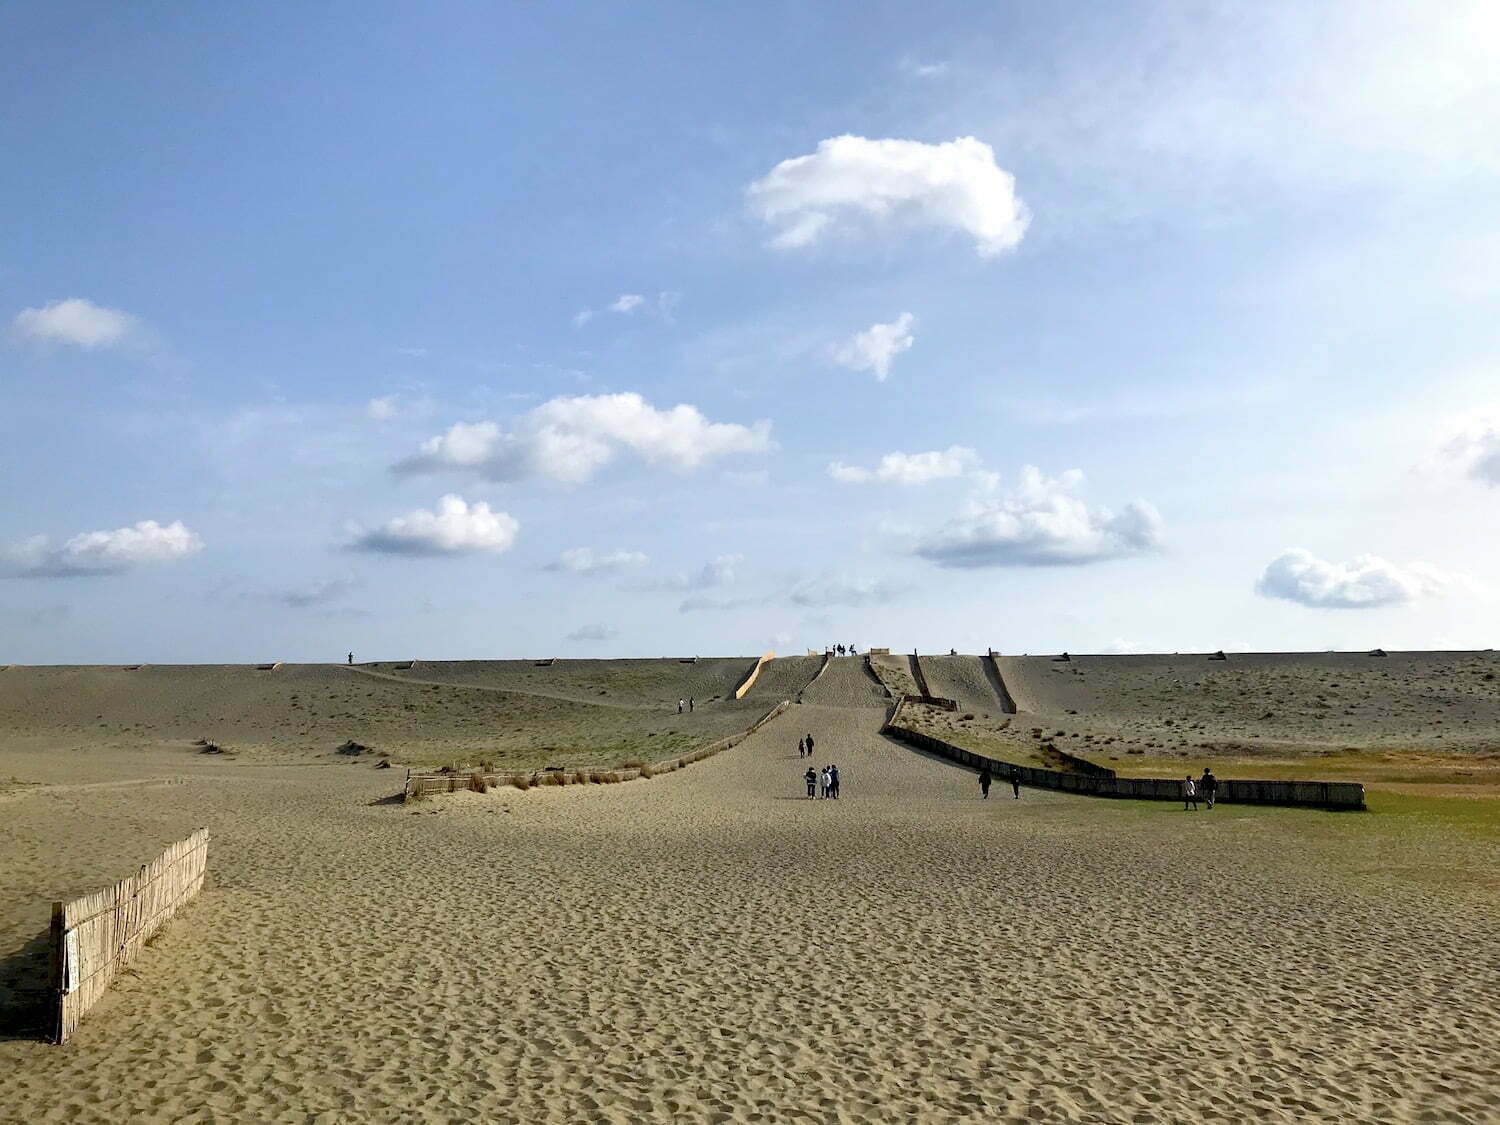 Nakatajima sand dunes